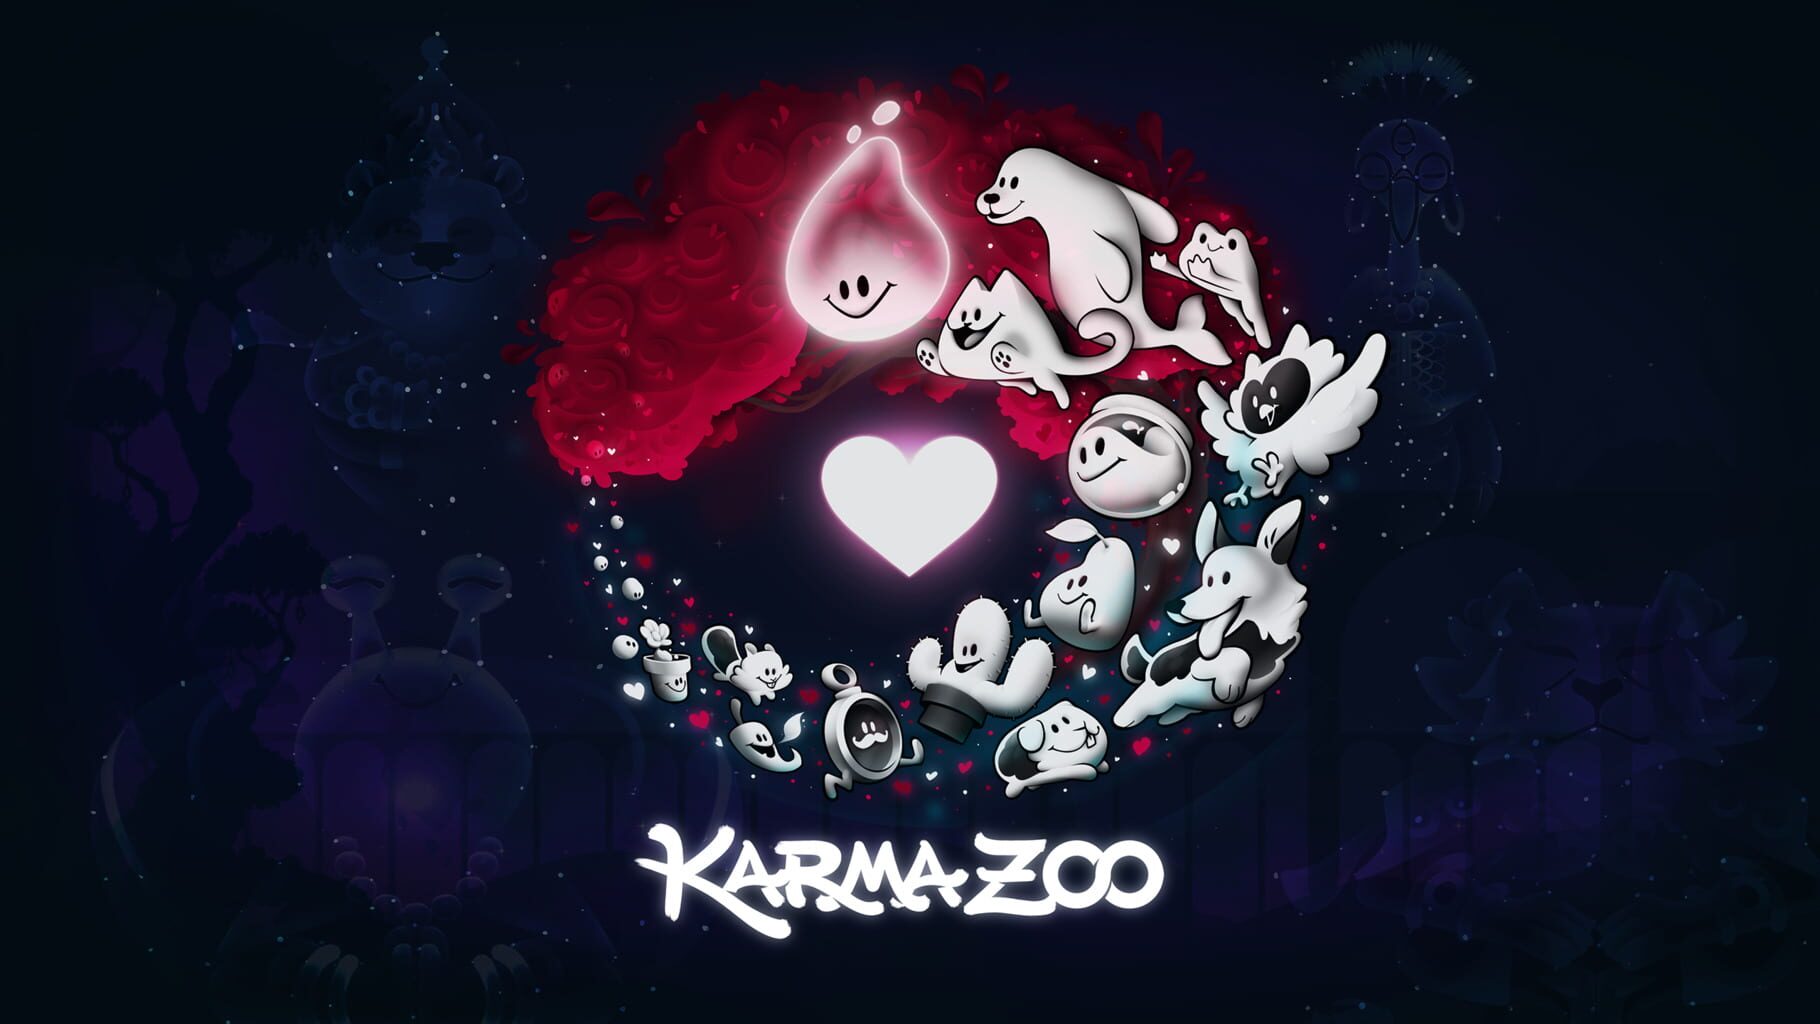 KarmaZoo artwork